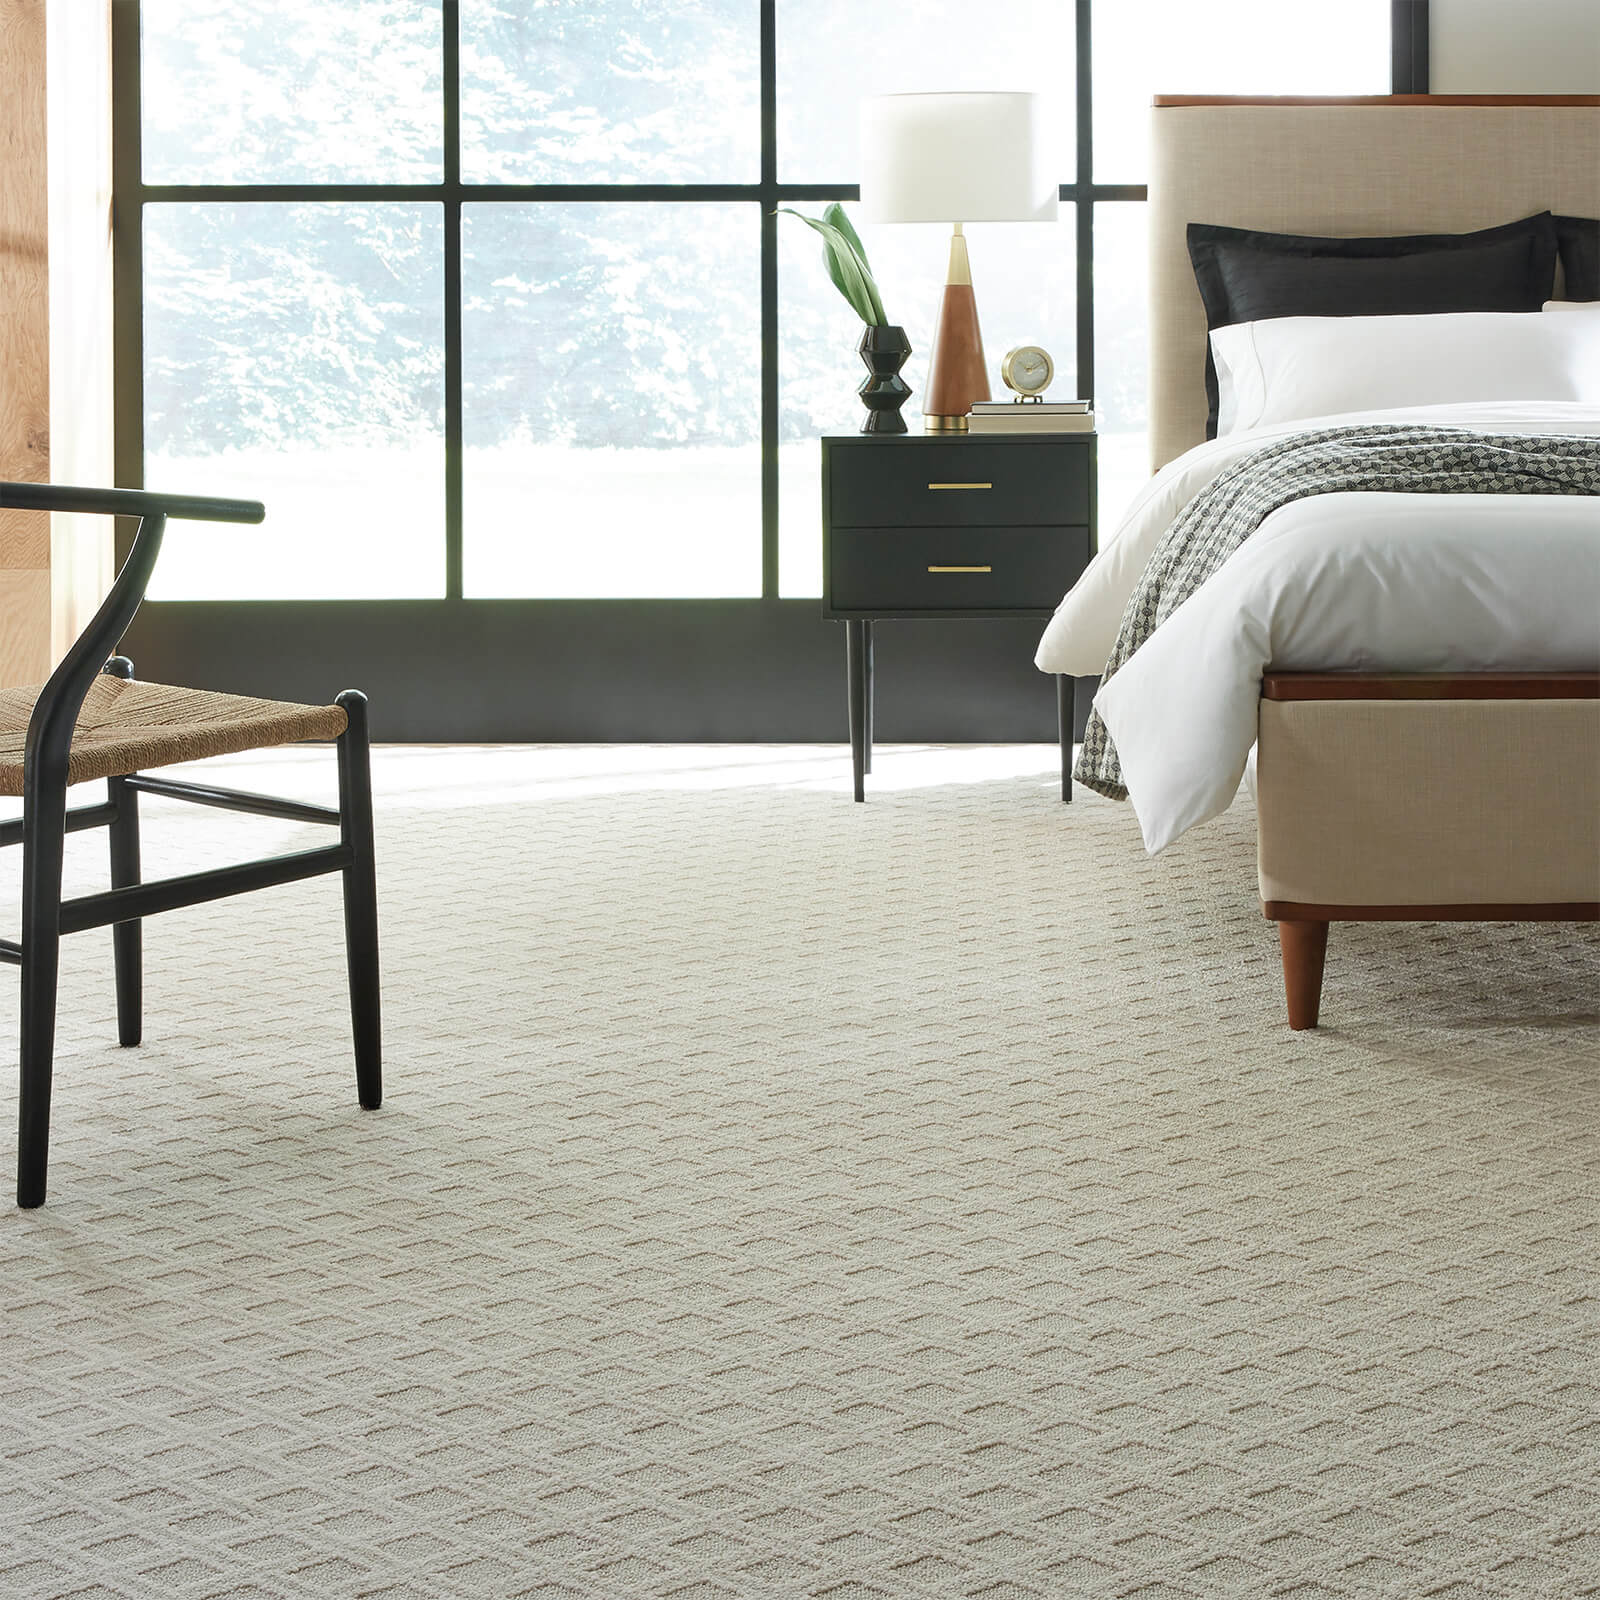 Bedroom carpet | Hadinger Flooring